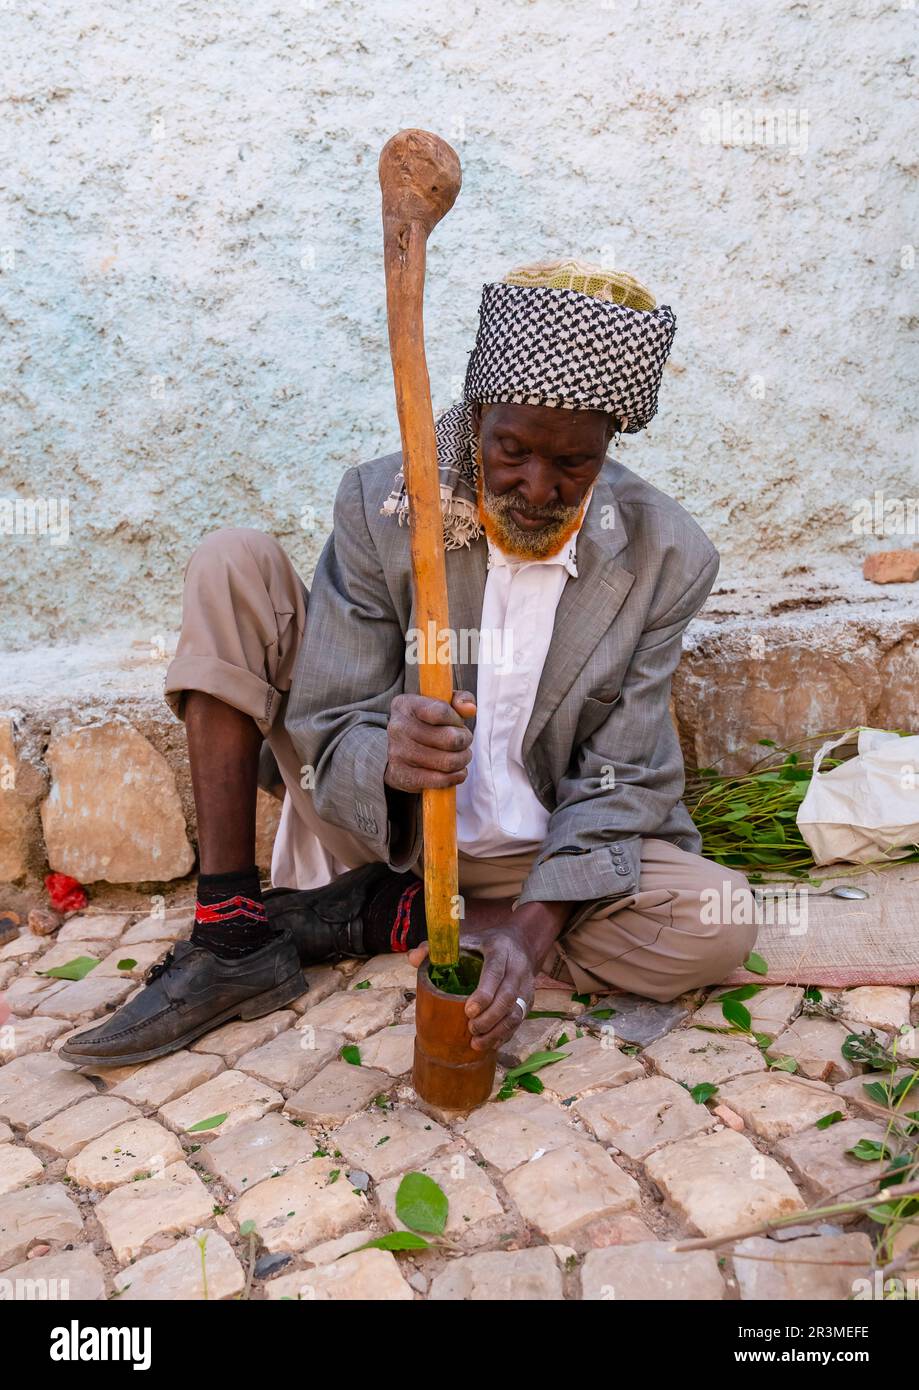 Old man without teeth crashing qat to chew In the street, Harari Region, Harar, Ethiopia Stock Photo